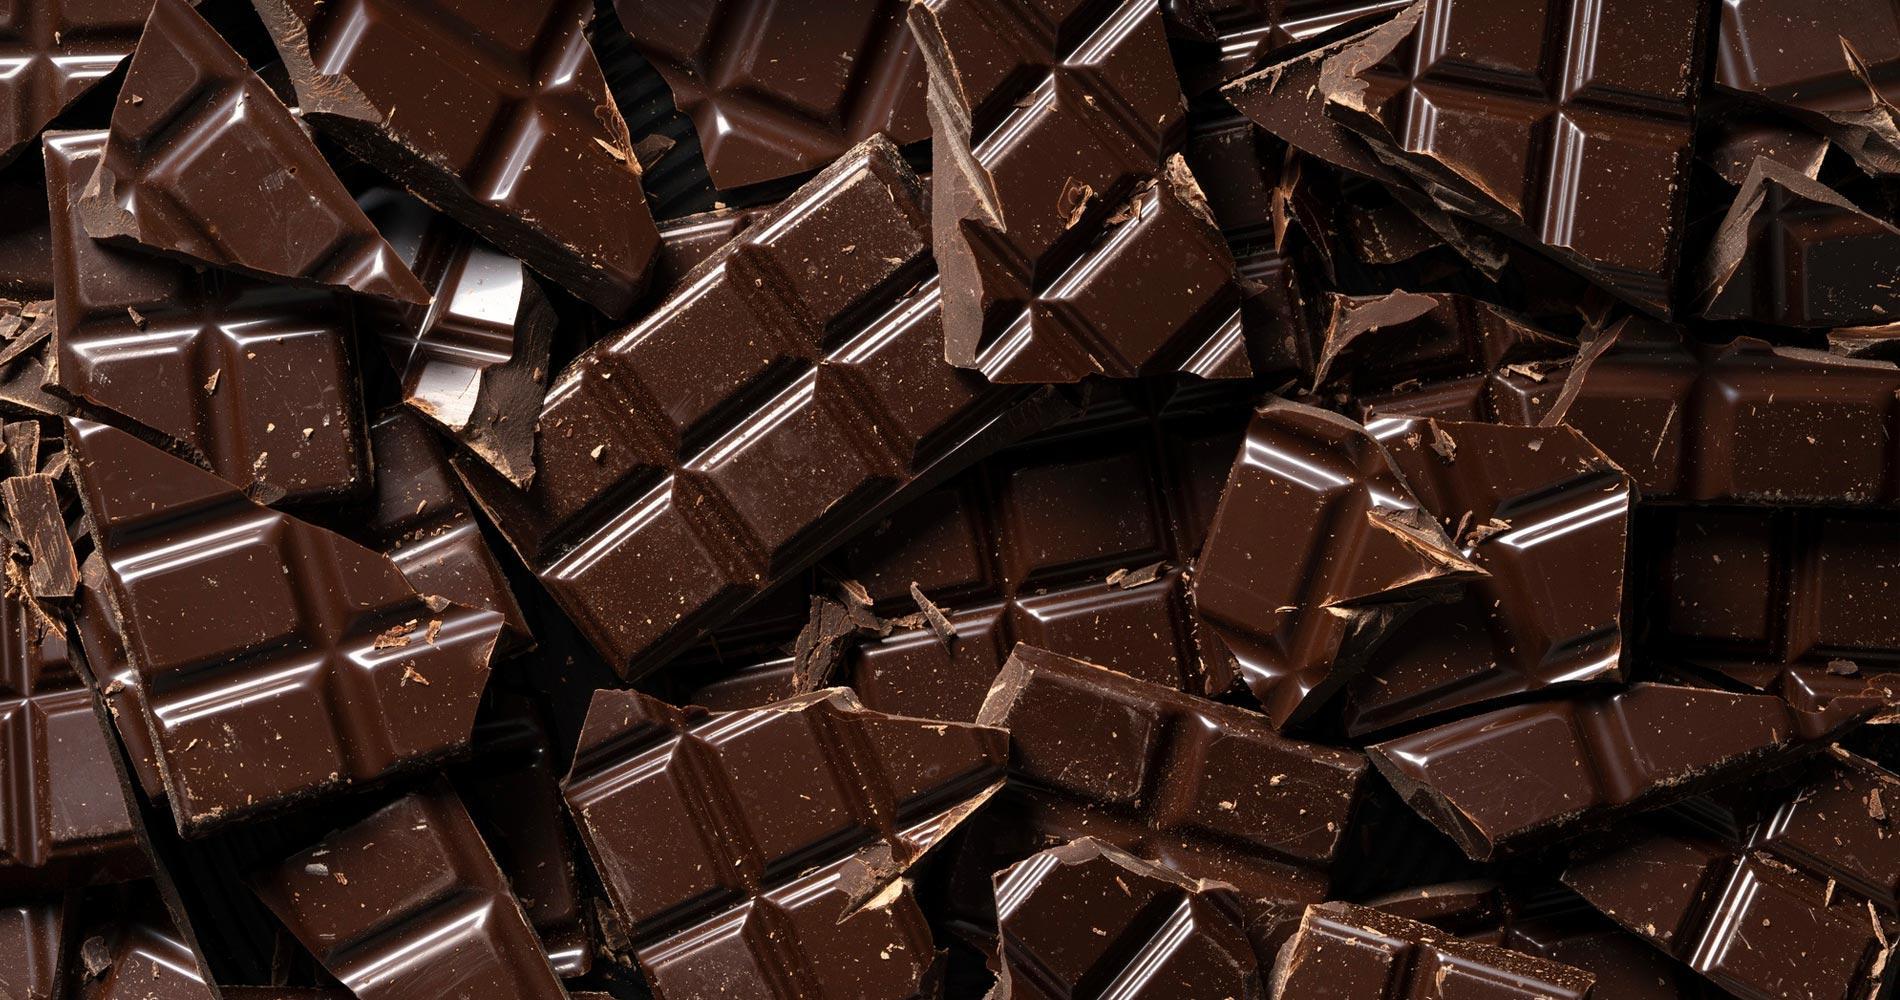 Child labor: The dark side of sweet chocolate